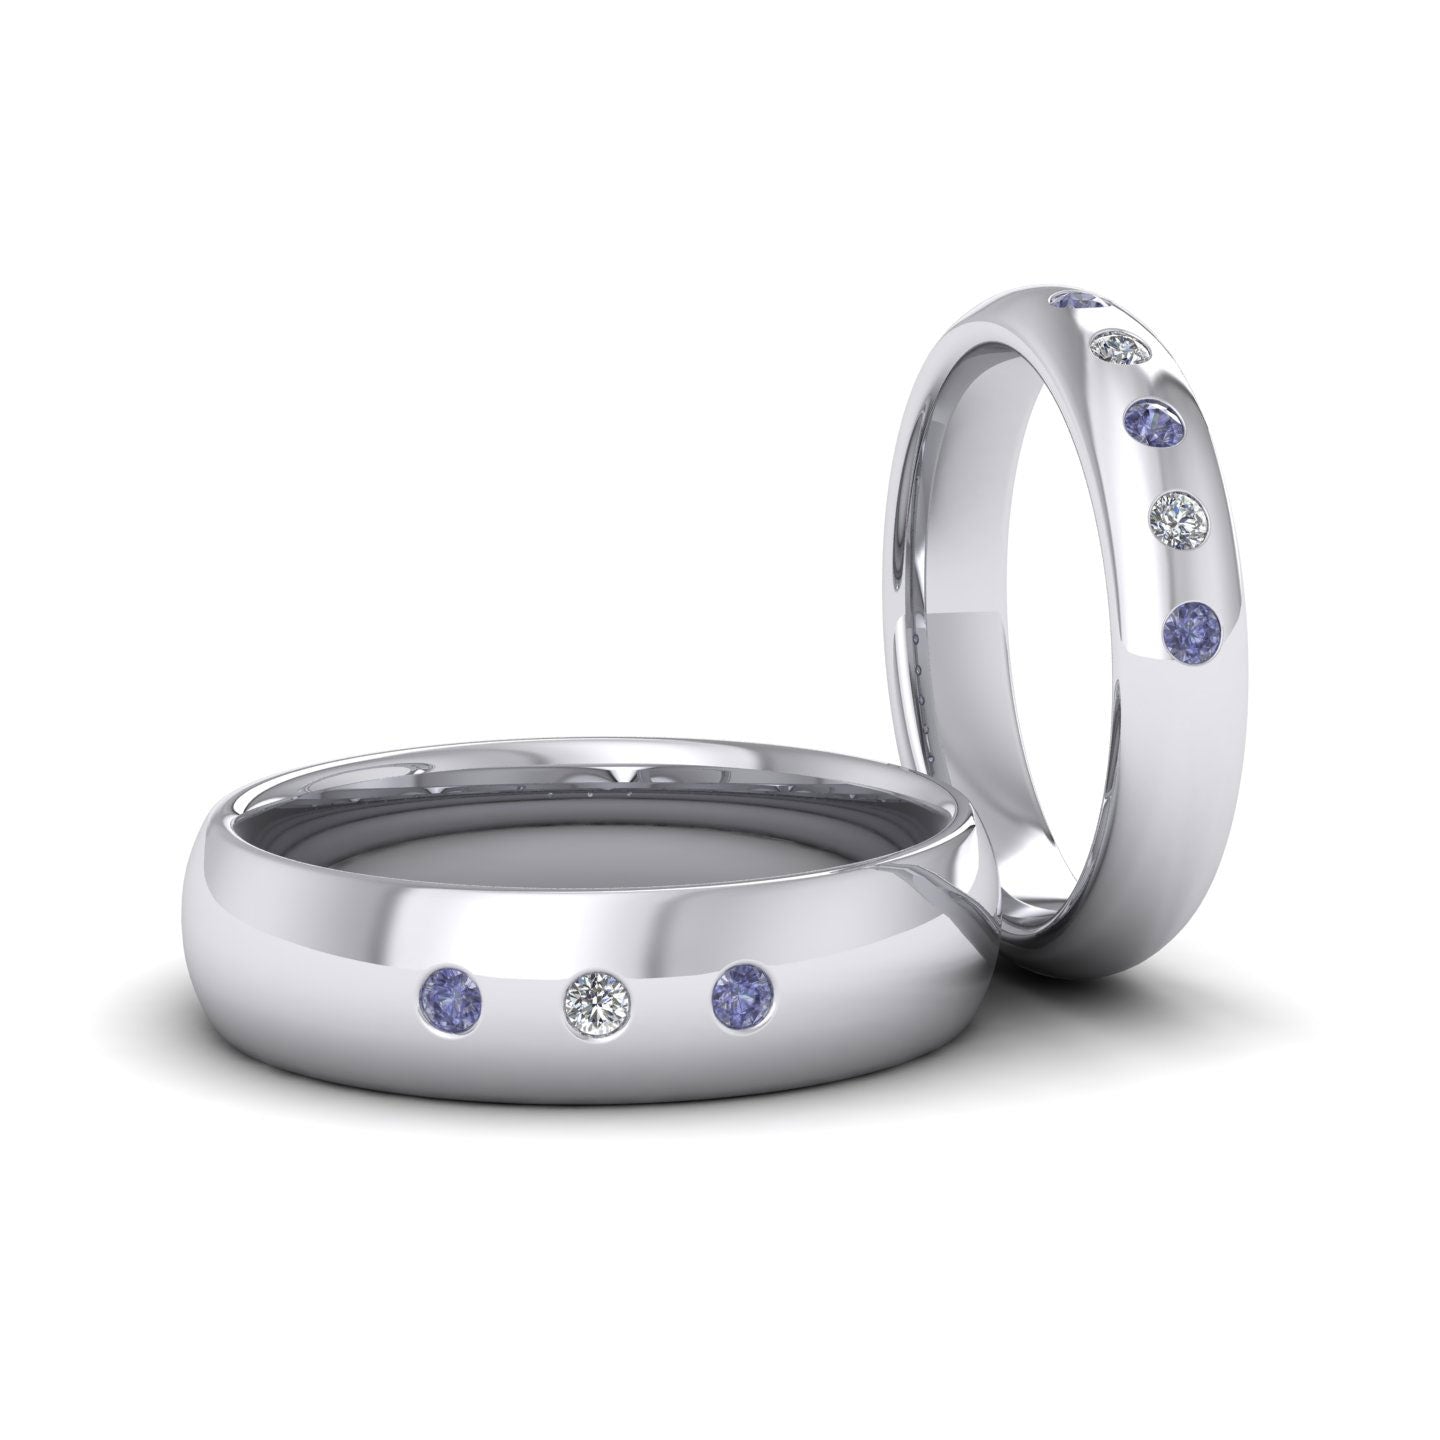 Palladium Diamond Ring Flat Court Grooved Wedding 6mm Band Solid &  Hallmarked | eBay